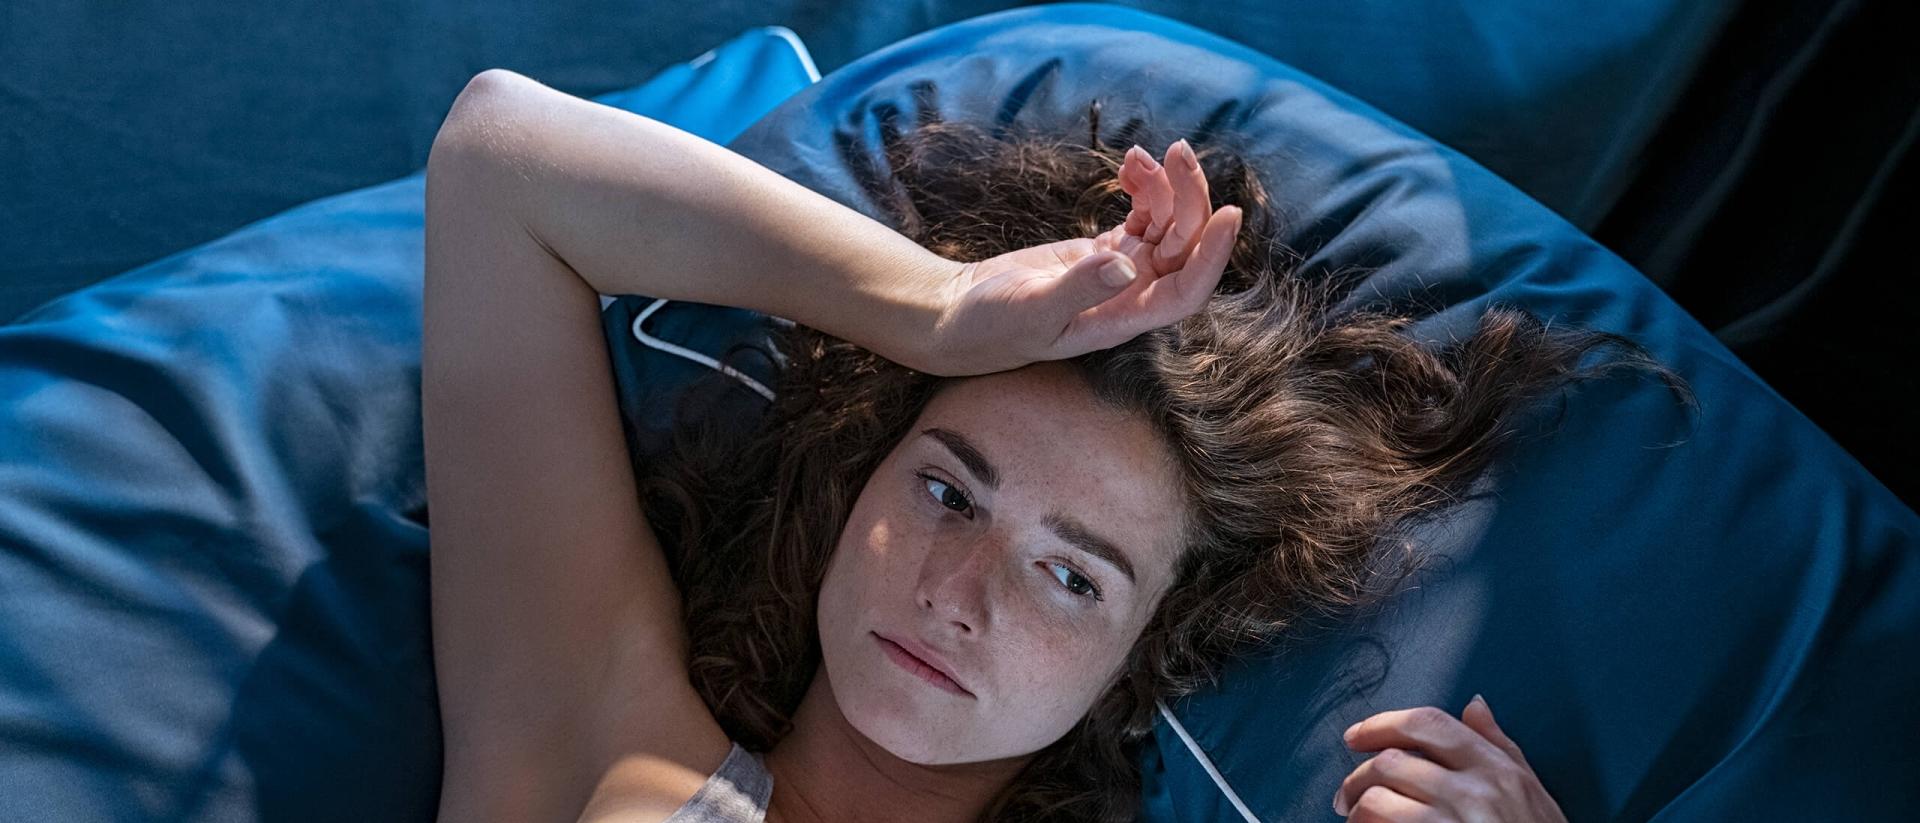 A woman lies awake on a blue bed due to hot sleep